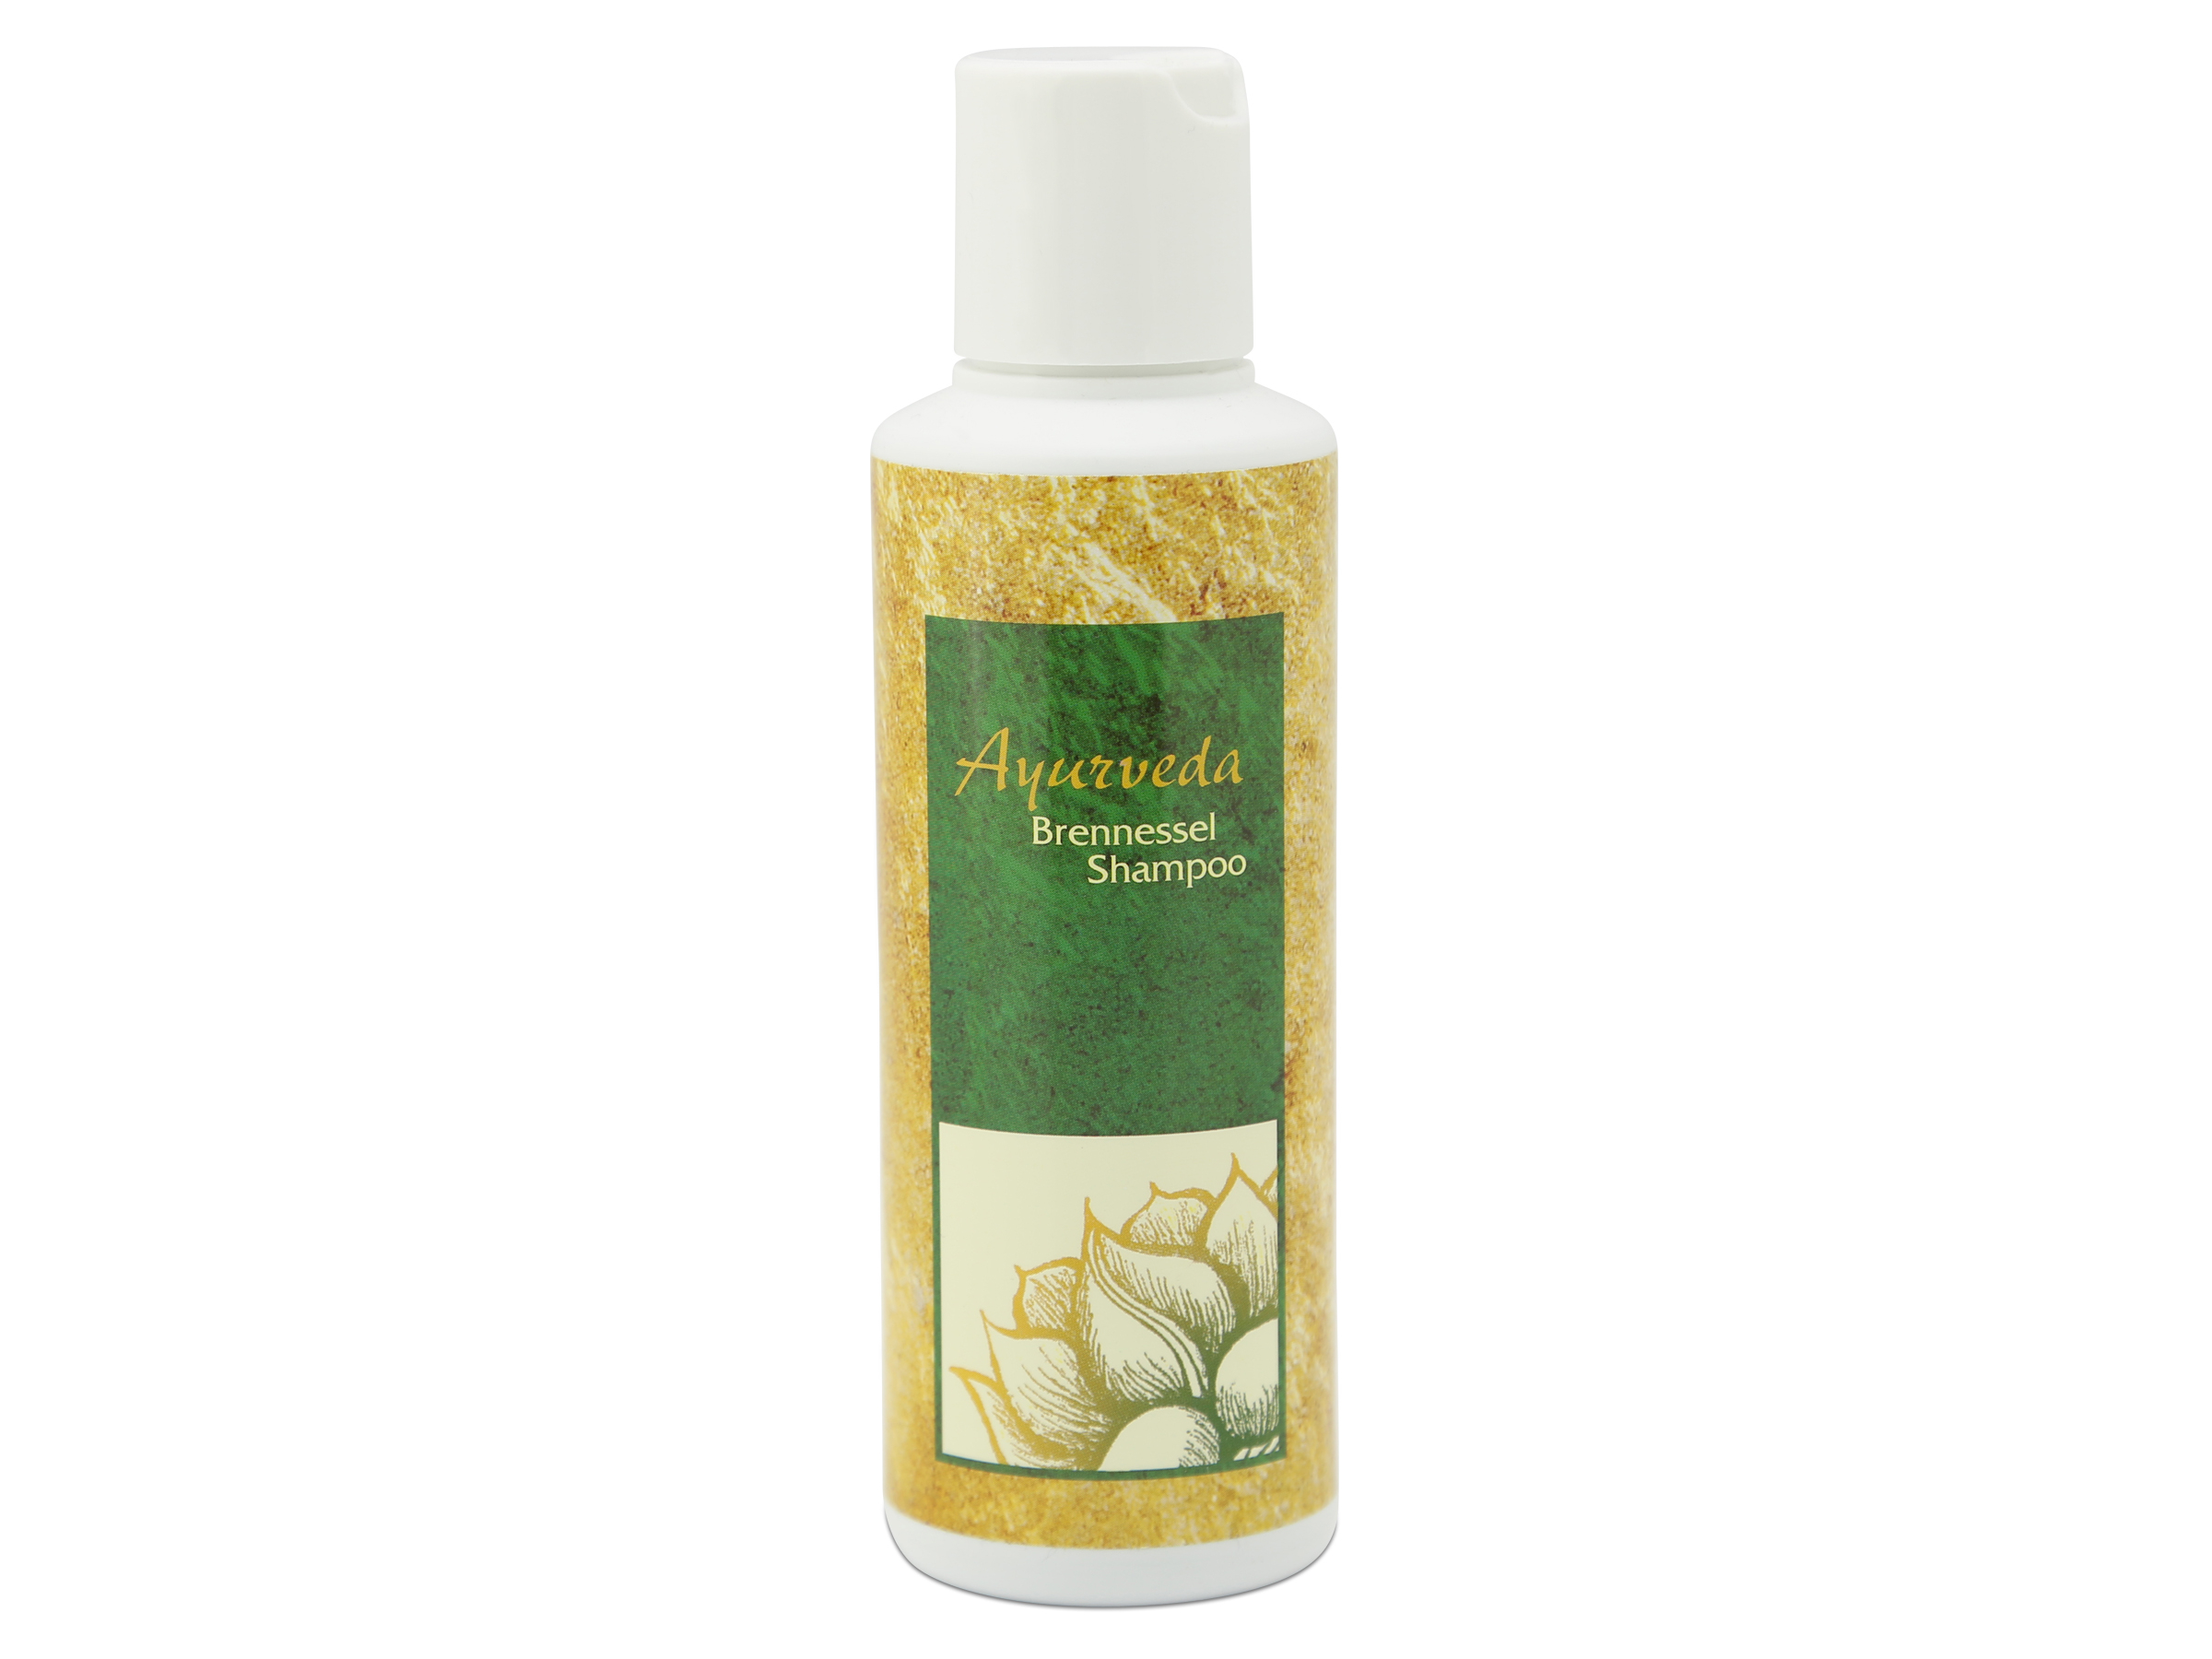 Ayurveda Brennessel Shampoo 200 ml